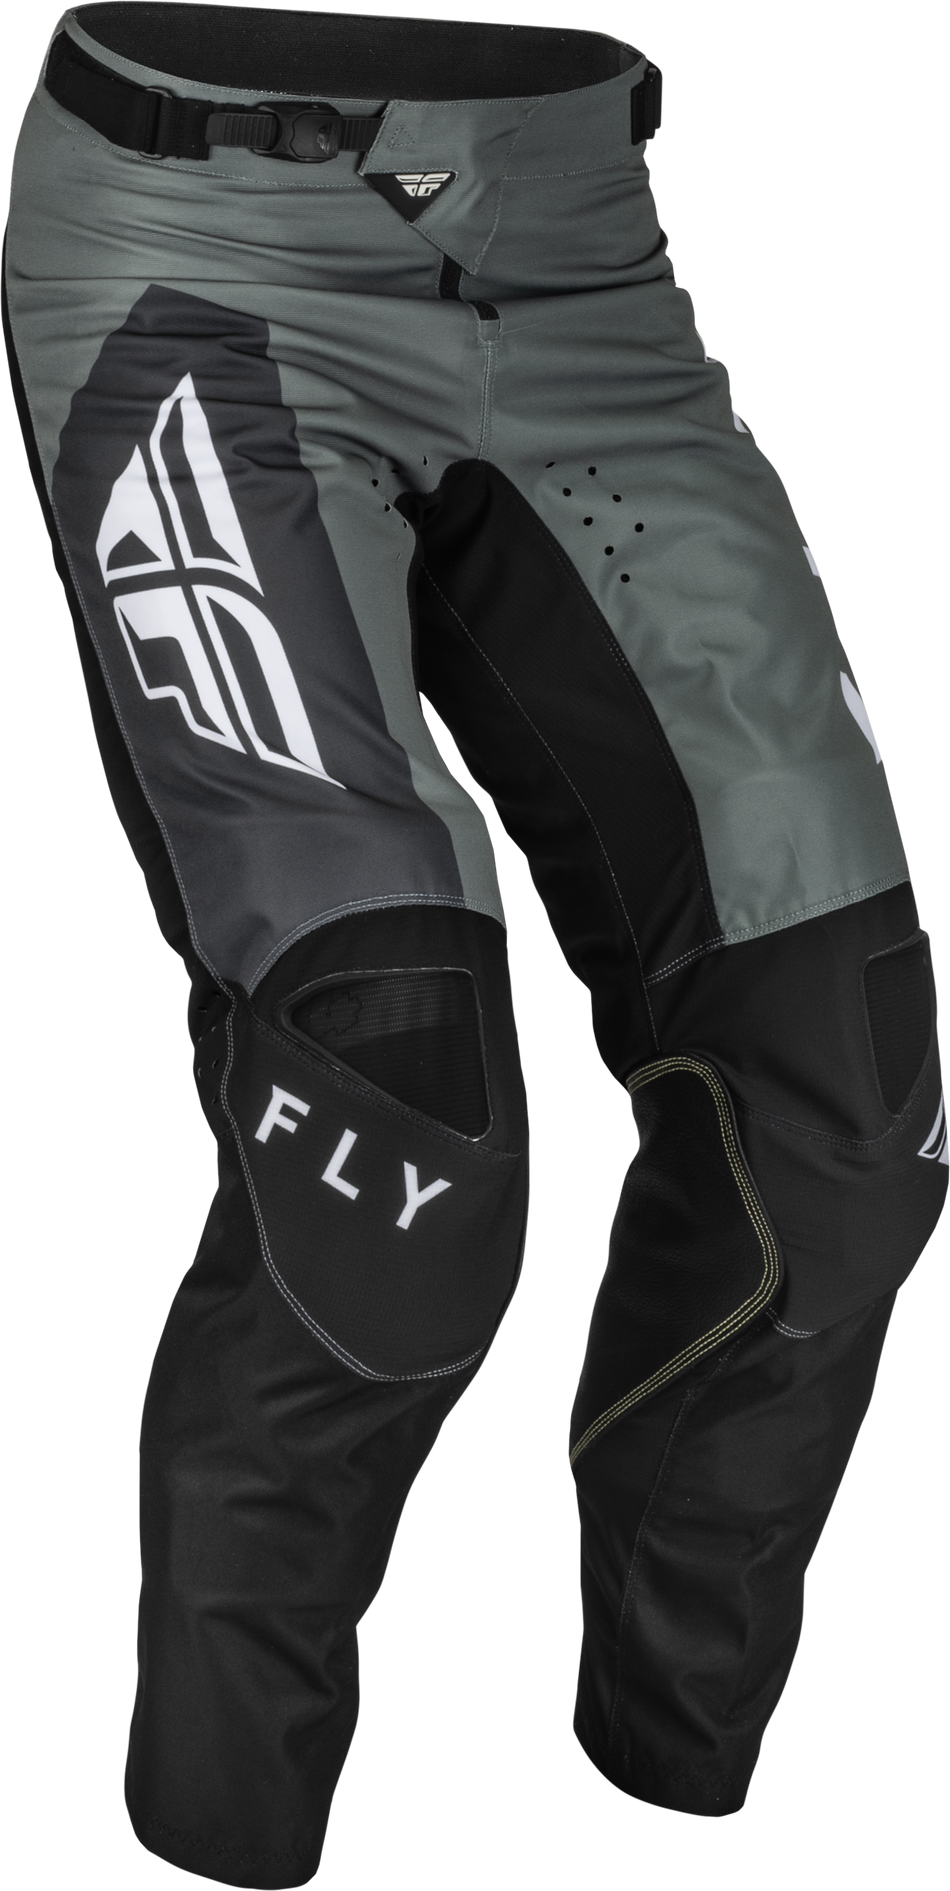 FLY RACING Kinetic Jet Pants Grey/Dark Grey/Black Sz 30 376-53330